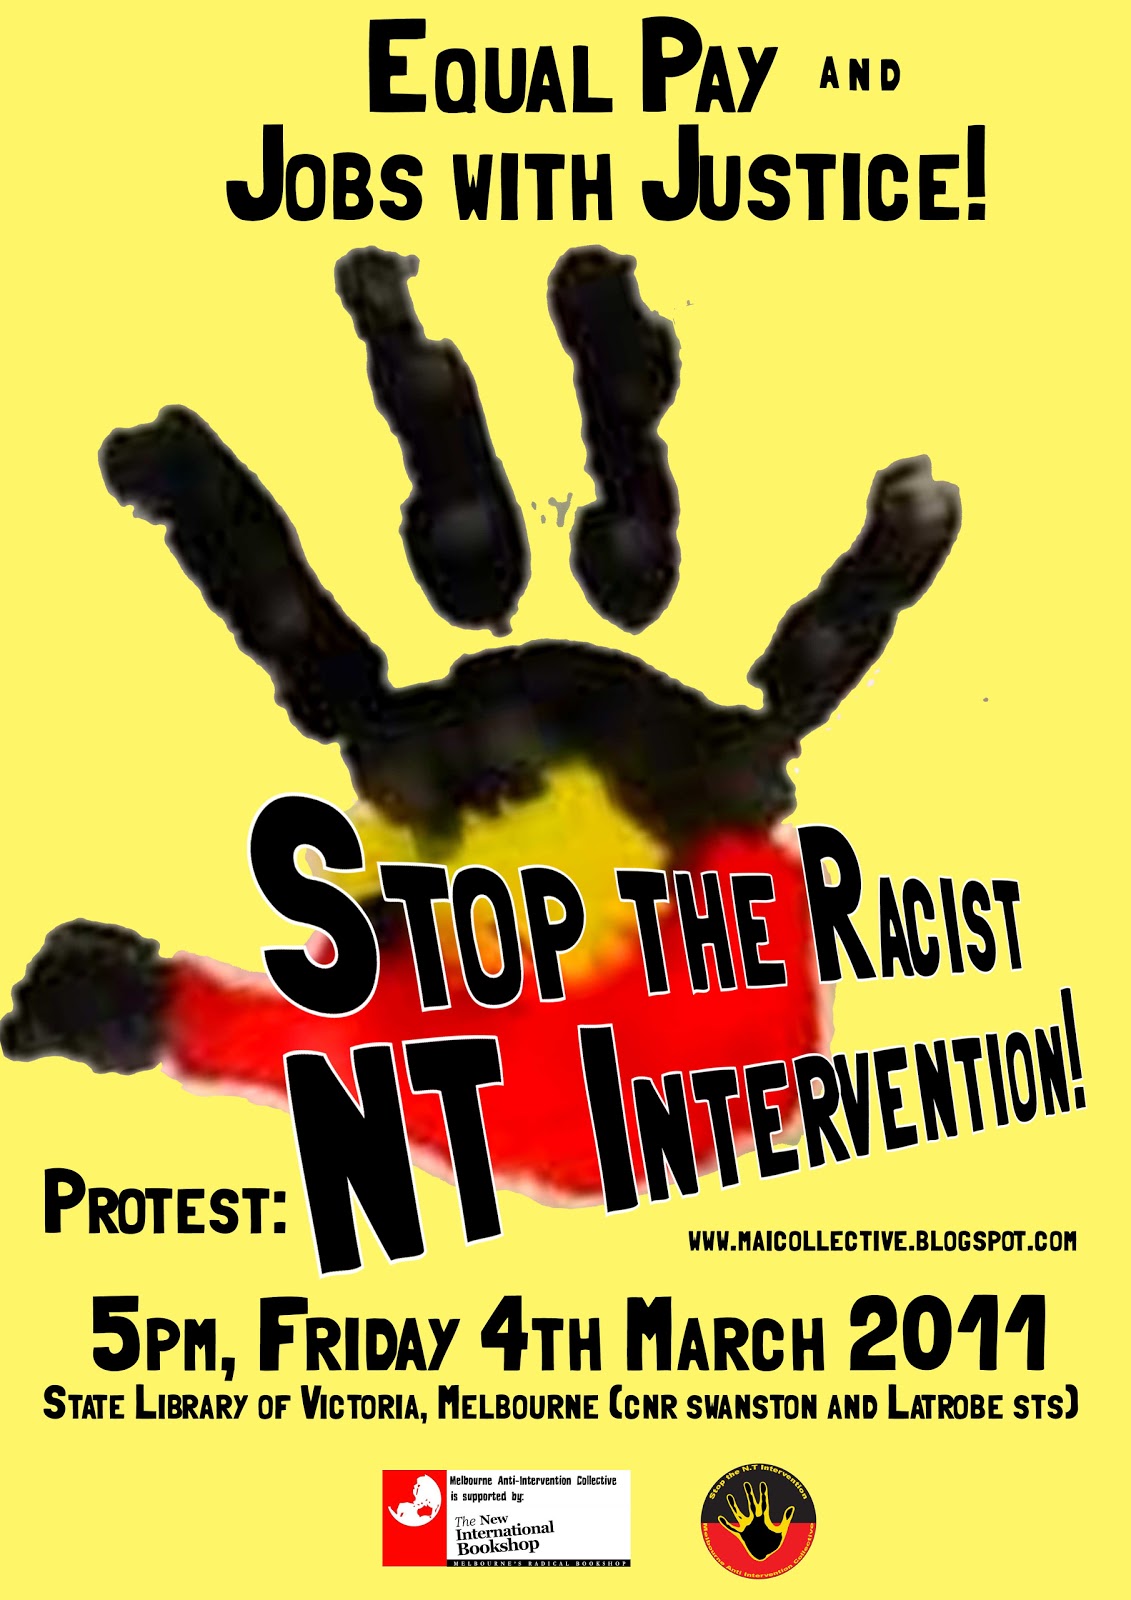 https://blogger.googleusercontent.com/img/b/R29vZ2xl/AVvXsEhKqmCn9LbhOW632wdxDhKNBceqjG428GxaJq6TqIx8ENBuwhyphenhypheniAmLIkht84MUAKuMI24iAKAgKMAmYL6rmALUTPe1t83IfwtZ77-Xgfphz9wjuRmMJN2_sWBHRkAIHxJkxc_SThP9t5_nI/s1600/MAIC+-+Protest+Poster+-+March+4+-+A3+-+UPDATED+-+yellow+background.jpg